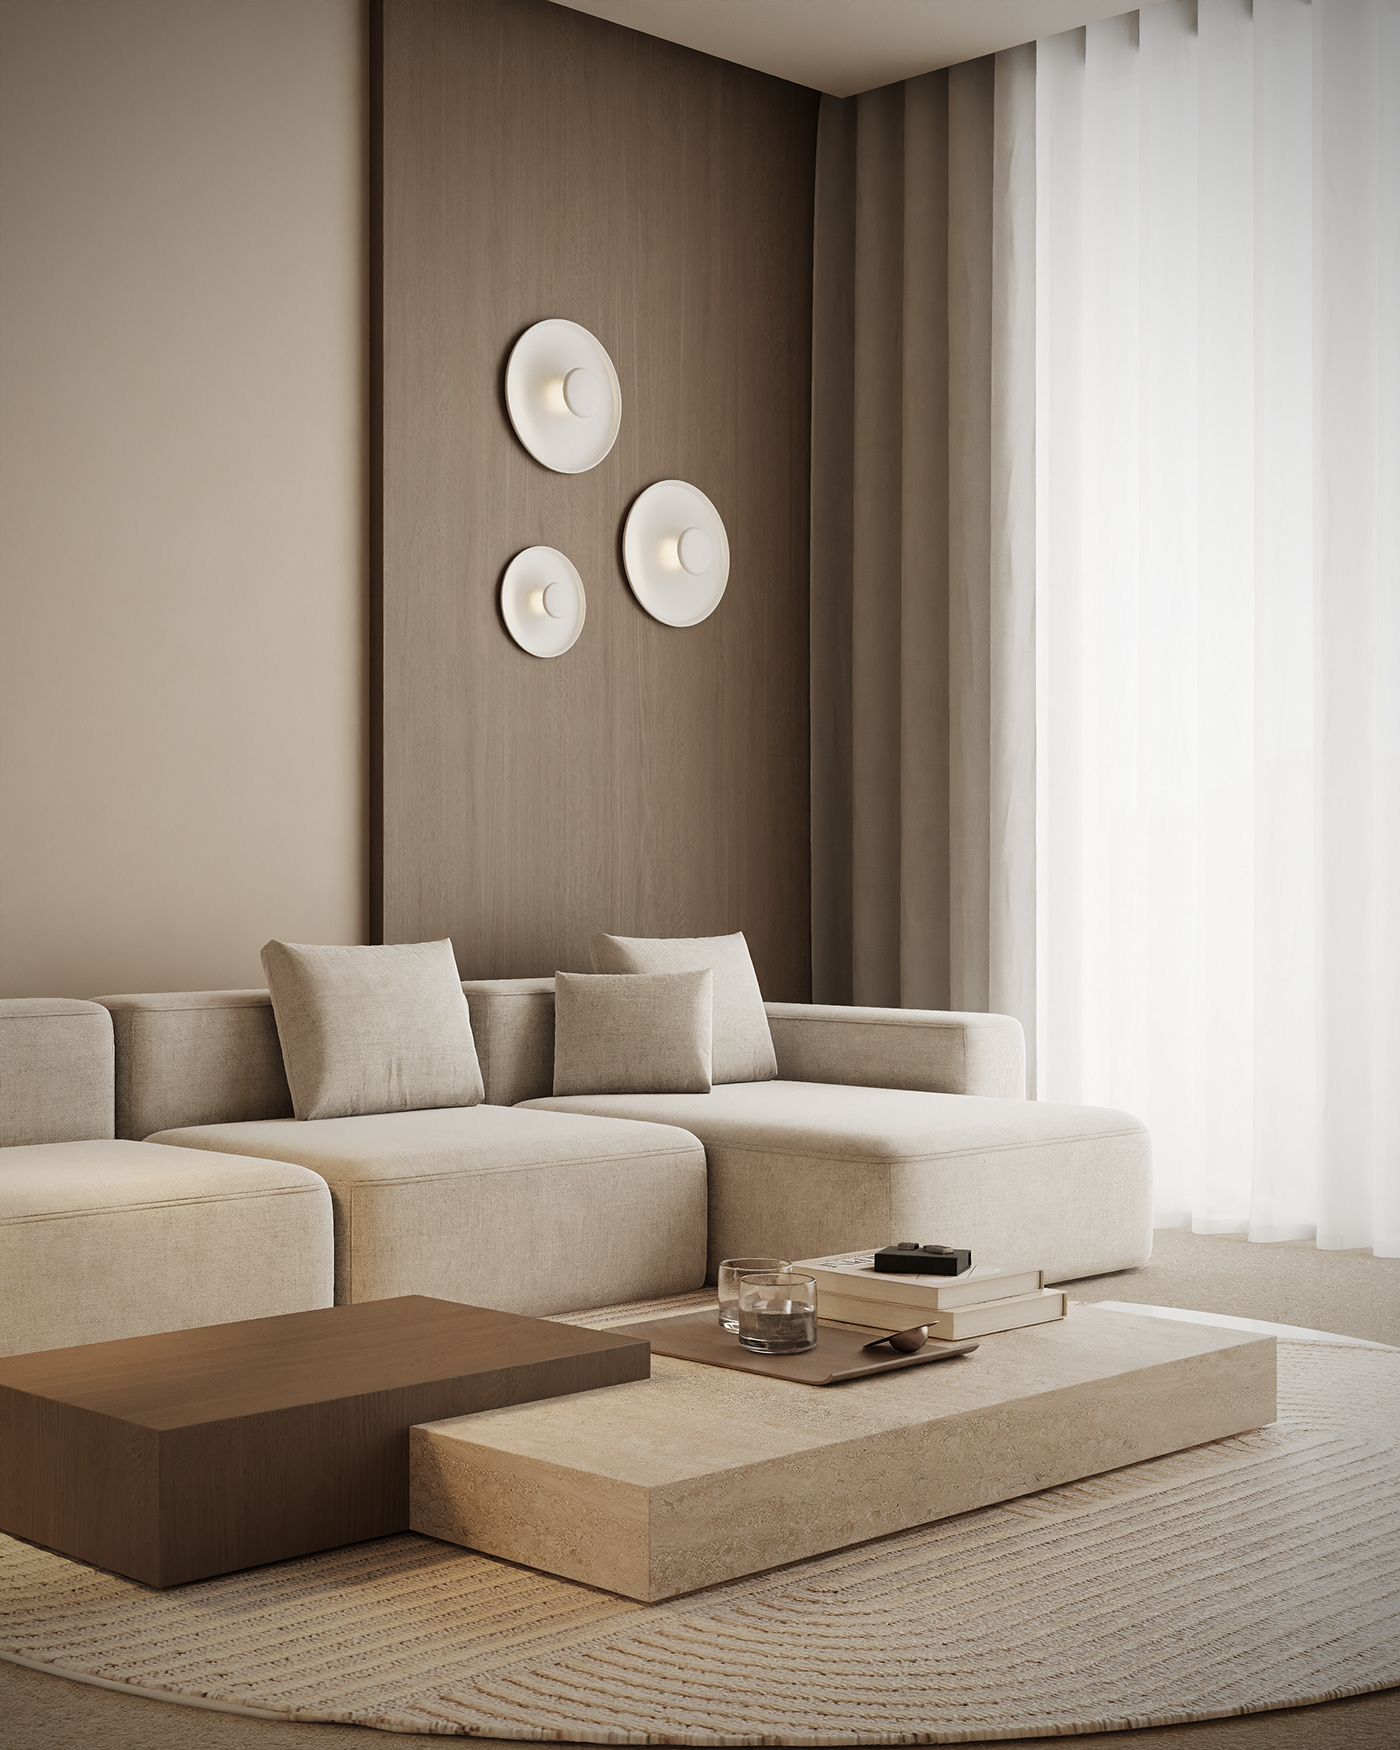 Minimalism minimal 3D architecture visualization Render archviz 3ds max CGI interior design 